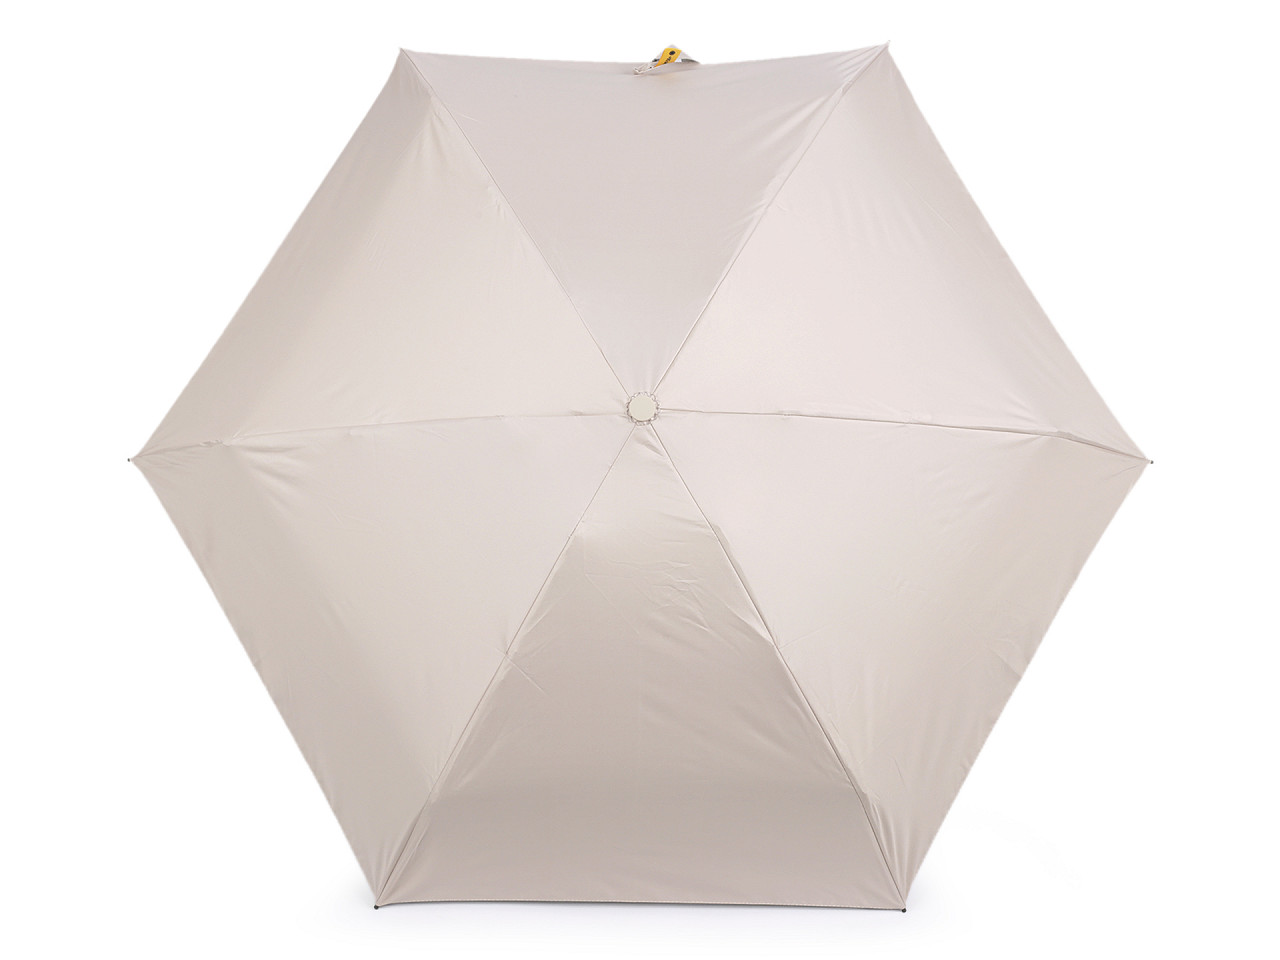 Faltbarer Mini-Regenschirm mit festem Etui, hellbeige, 1 Stück